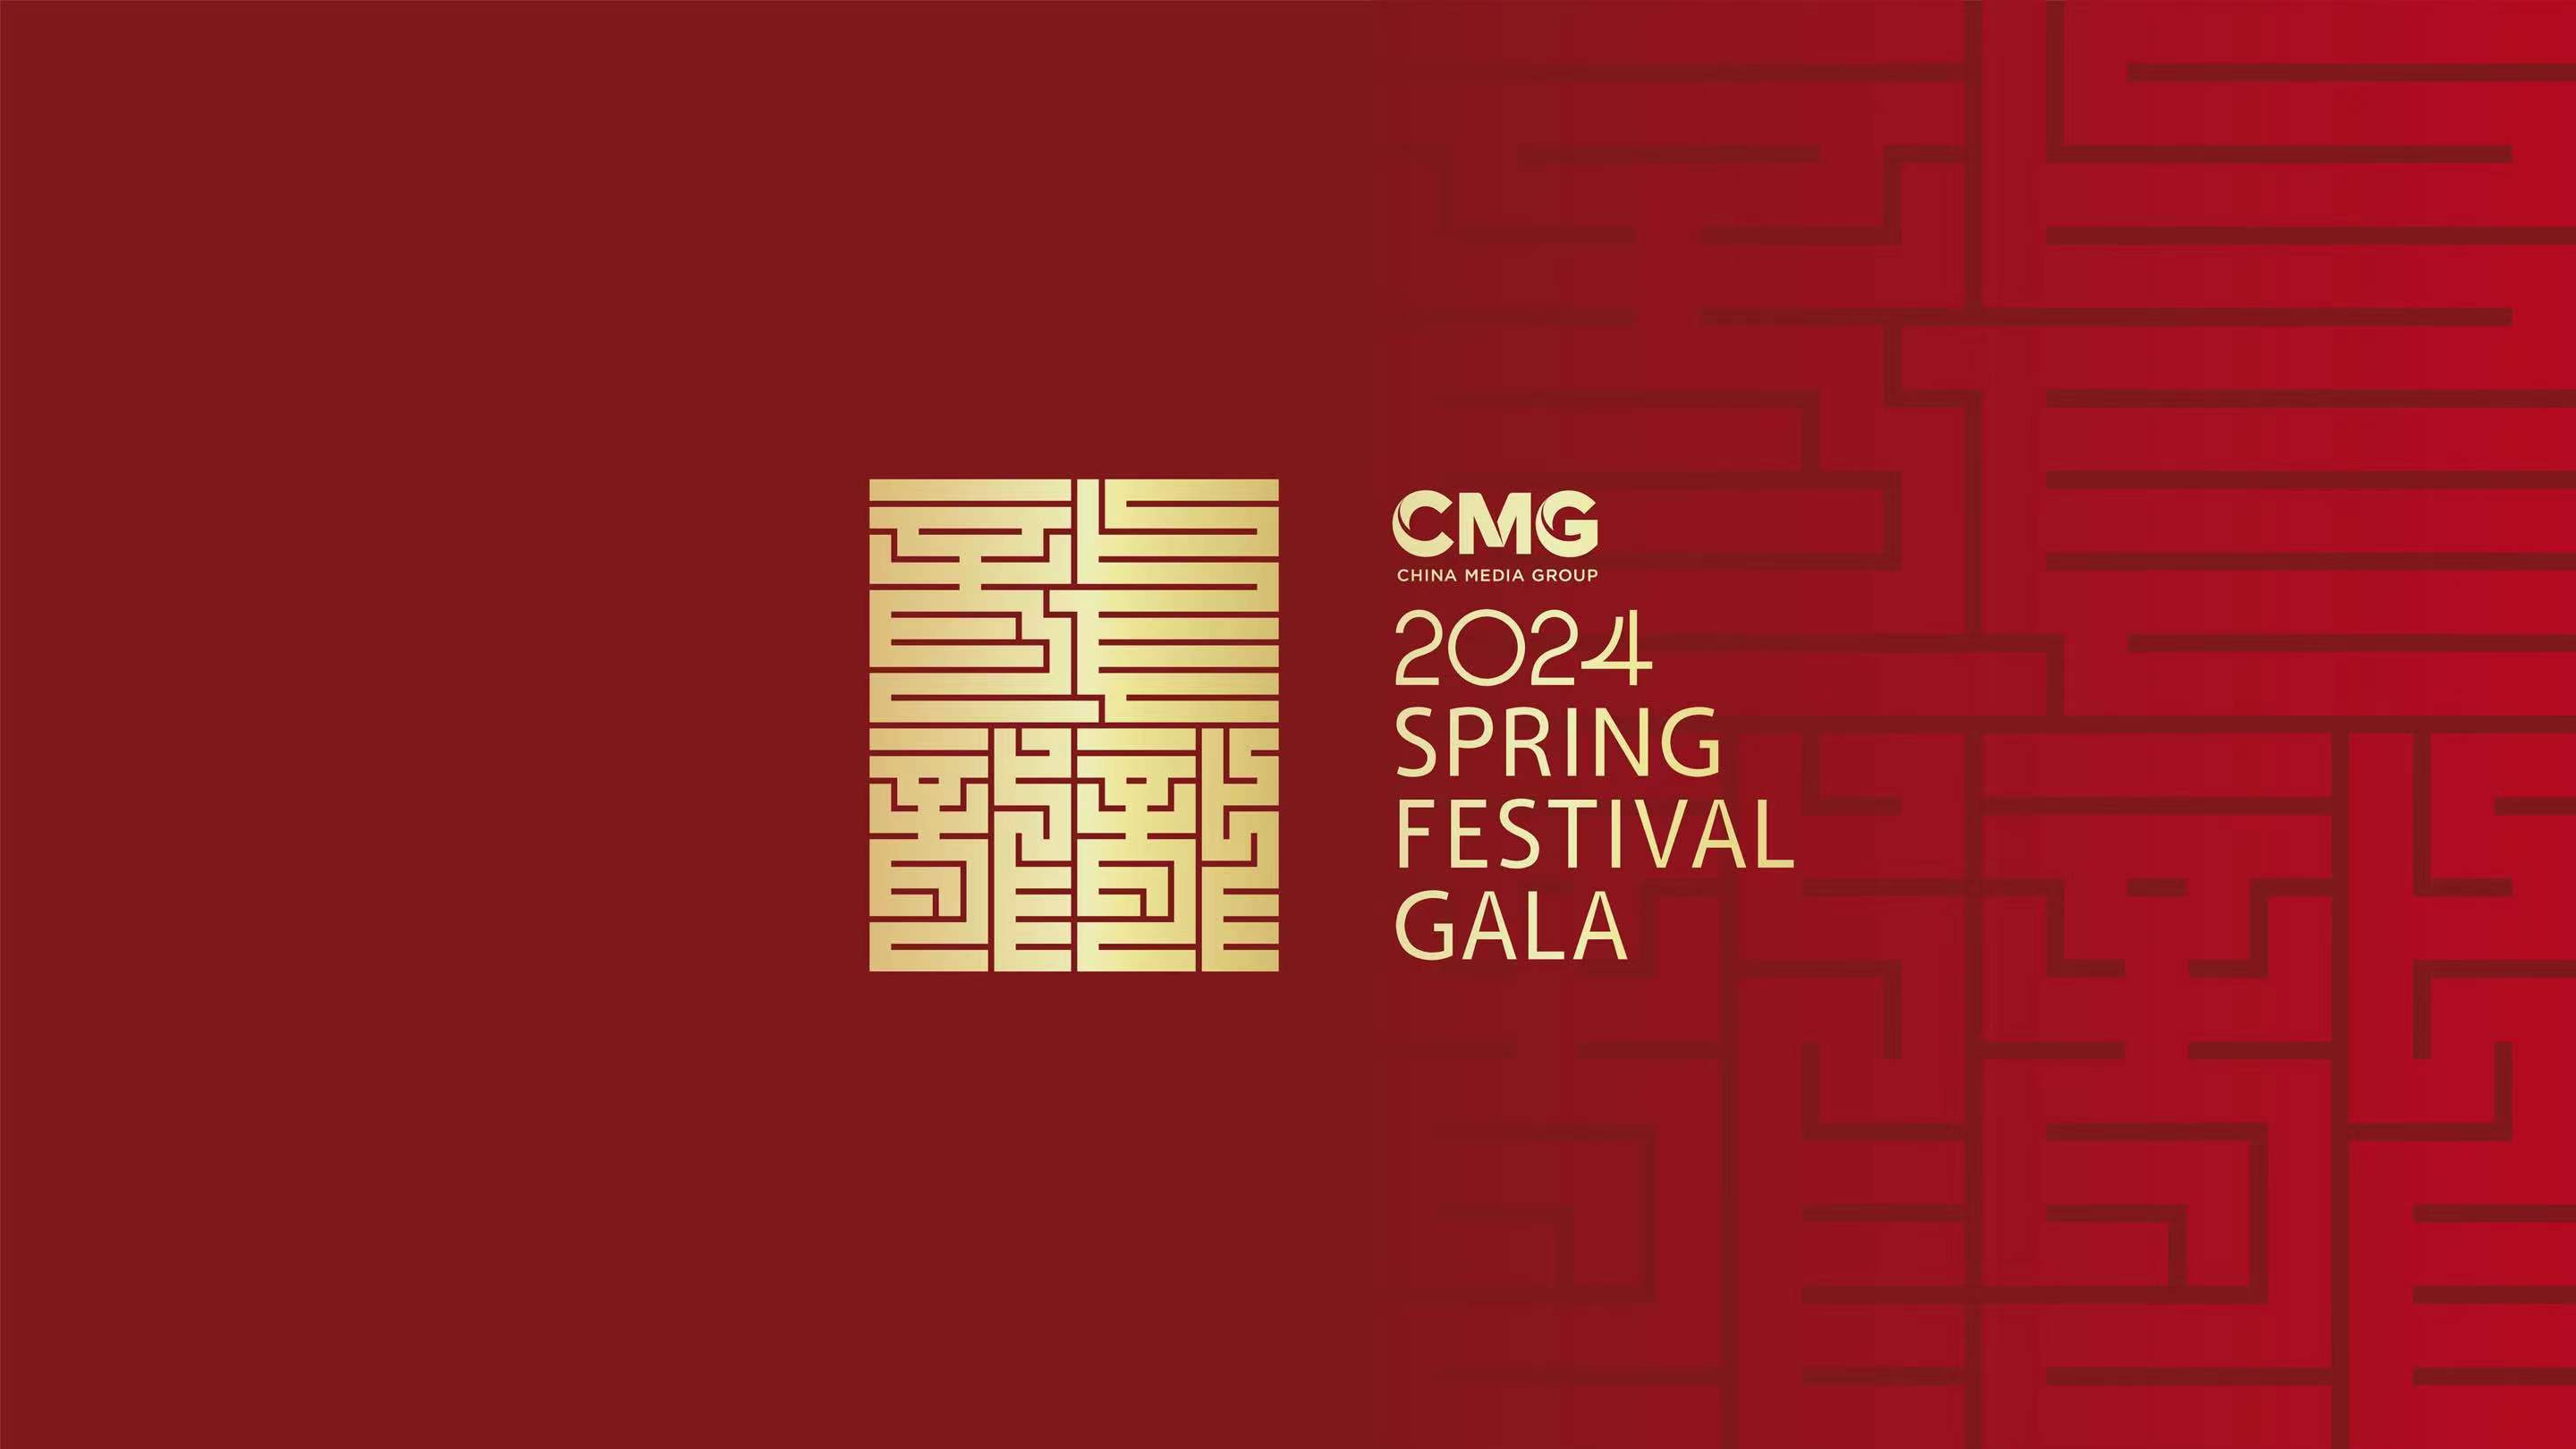 2024 Spring Festival Gala 'dragon' theme and logo unveiled CGTN